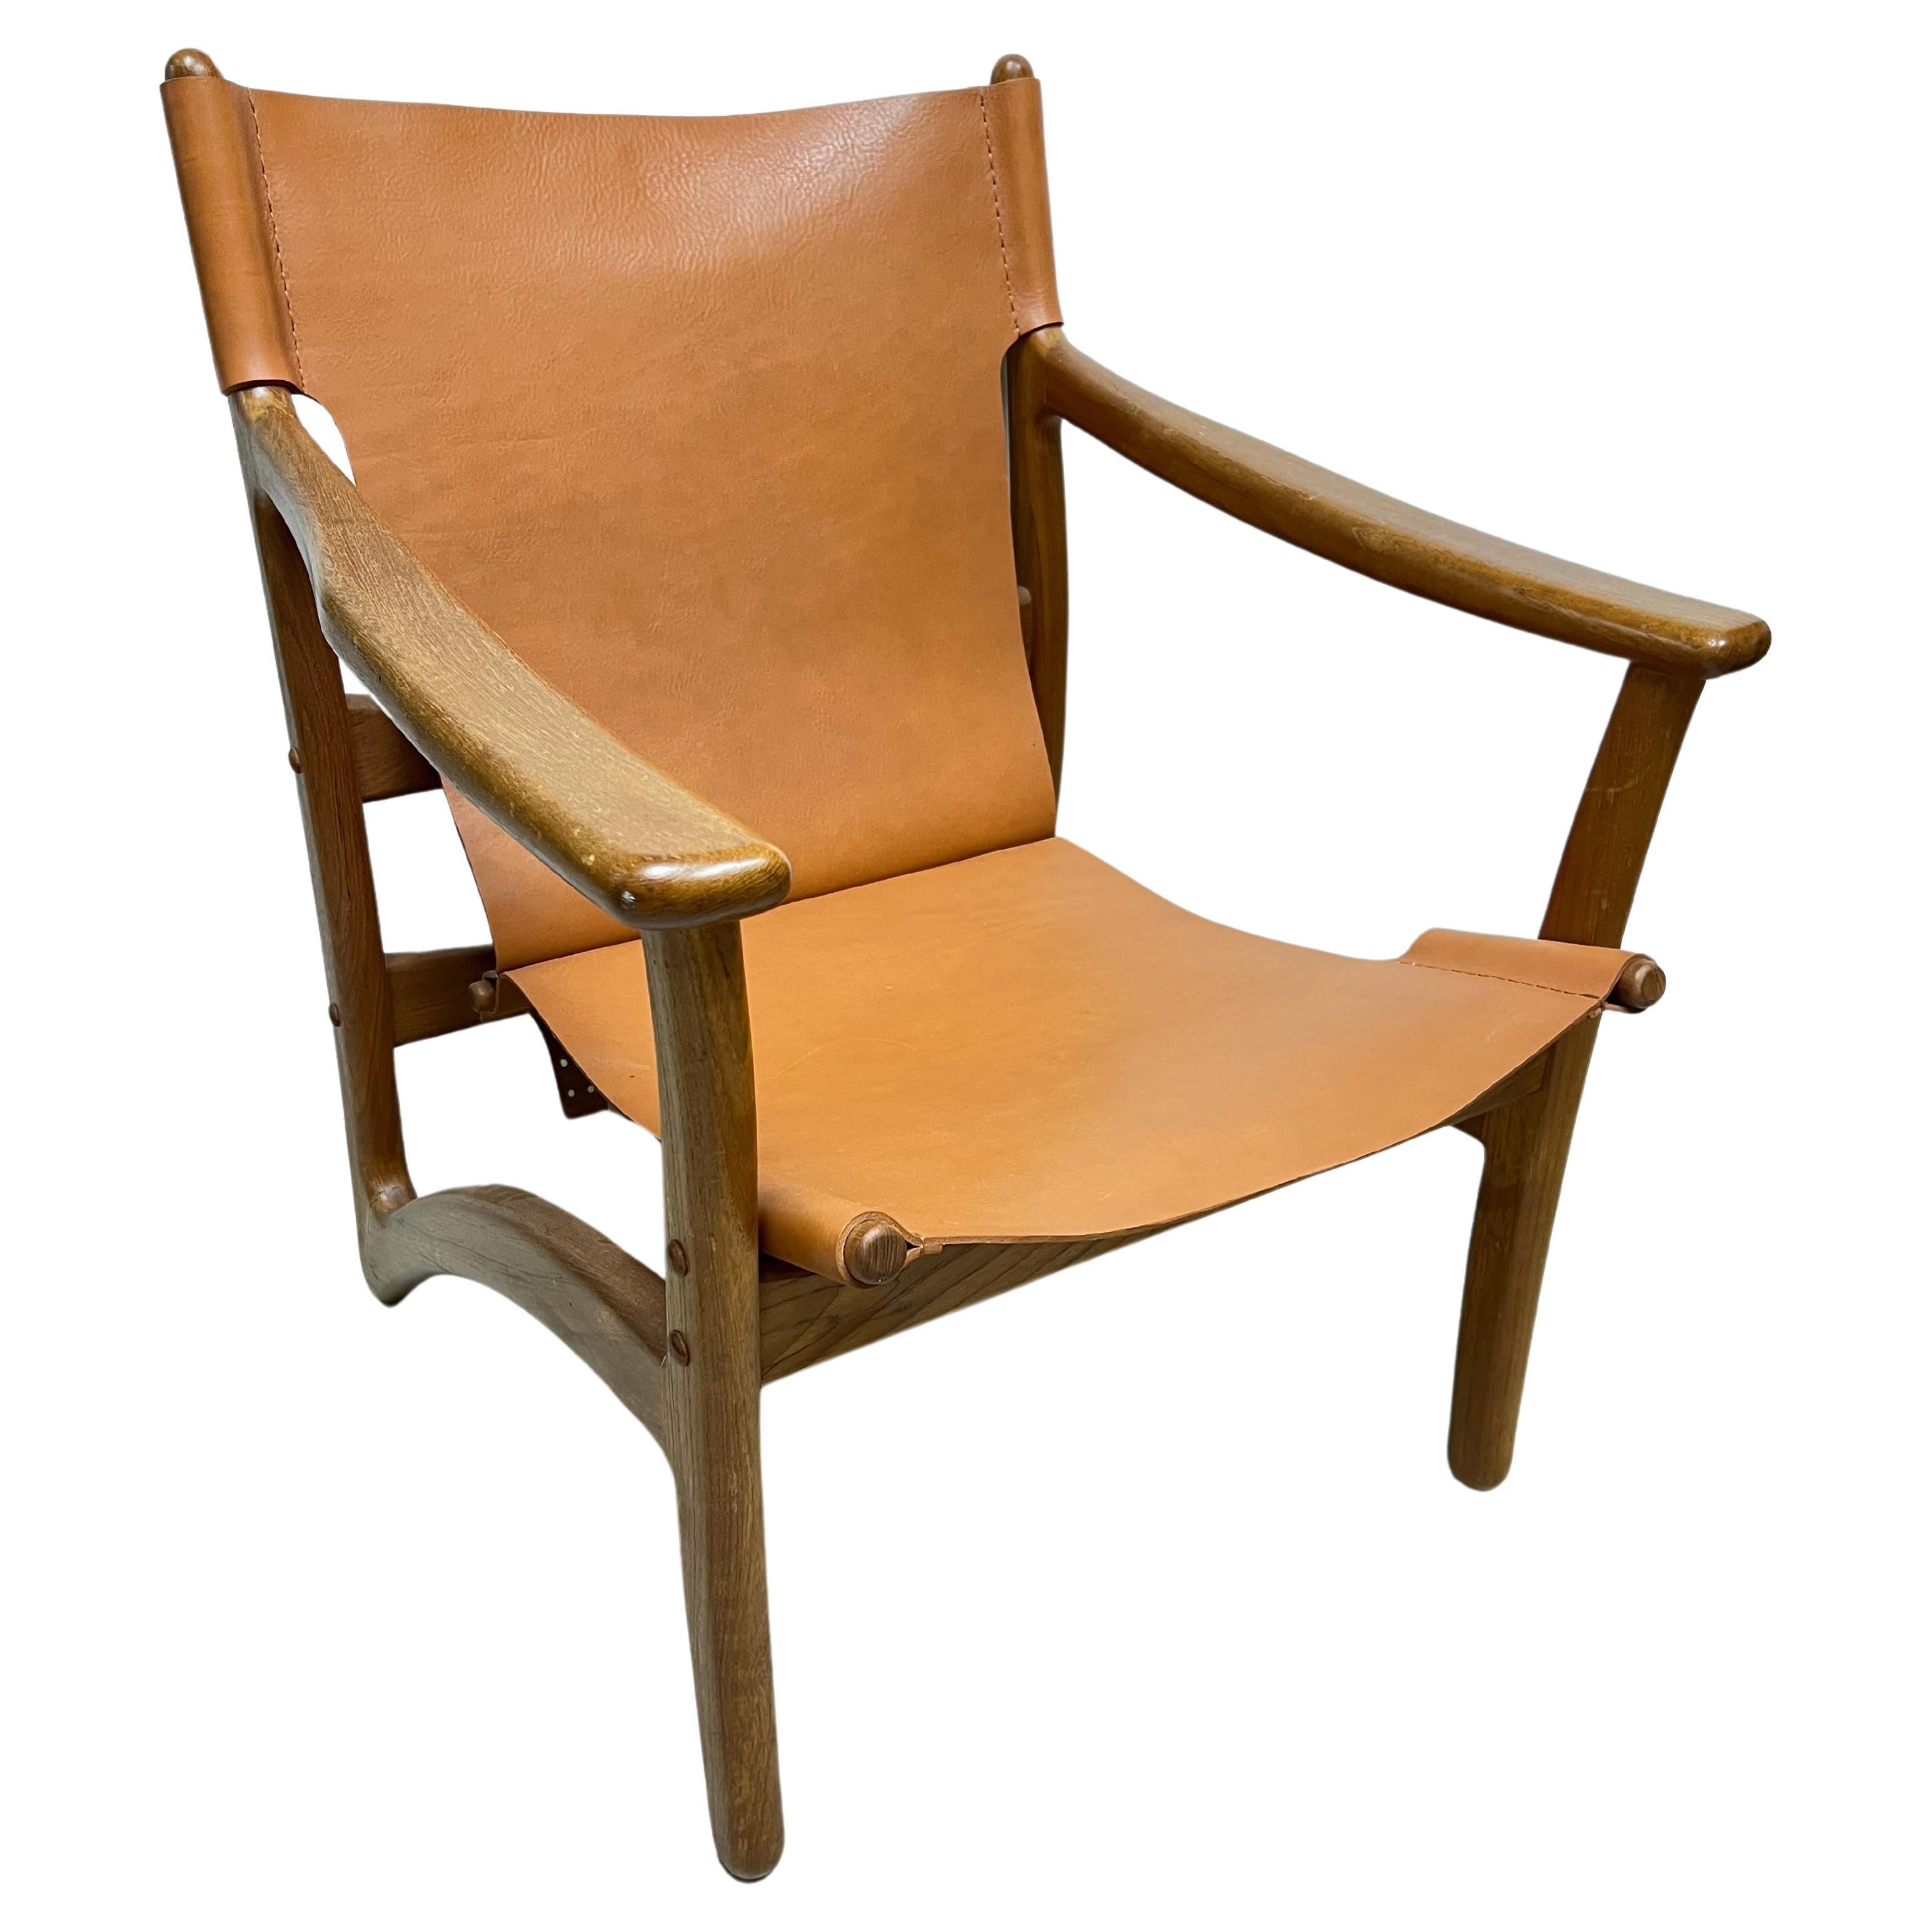 Arne Vodder for Kircodan Danish Teak and Cognac Leather Lounge Chair 1950s For Sale